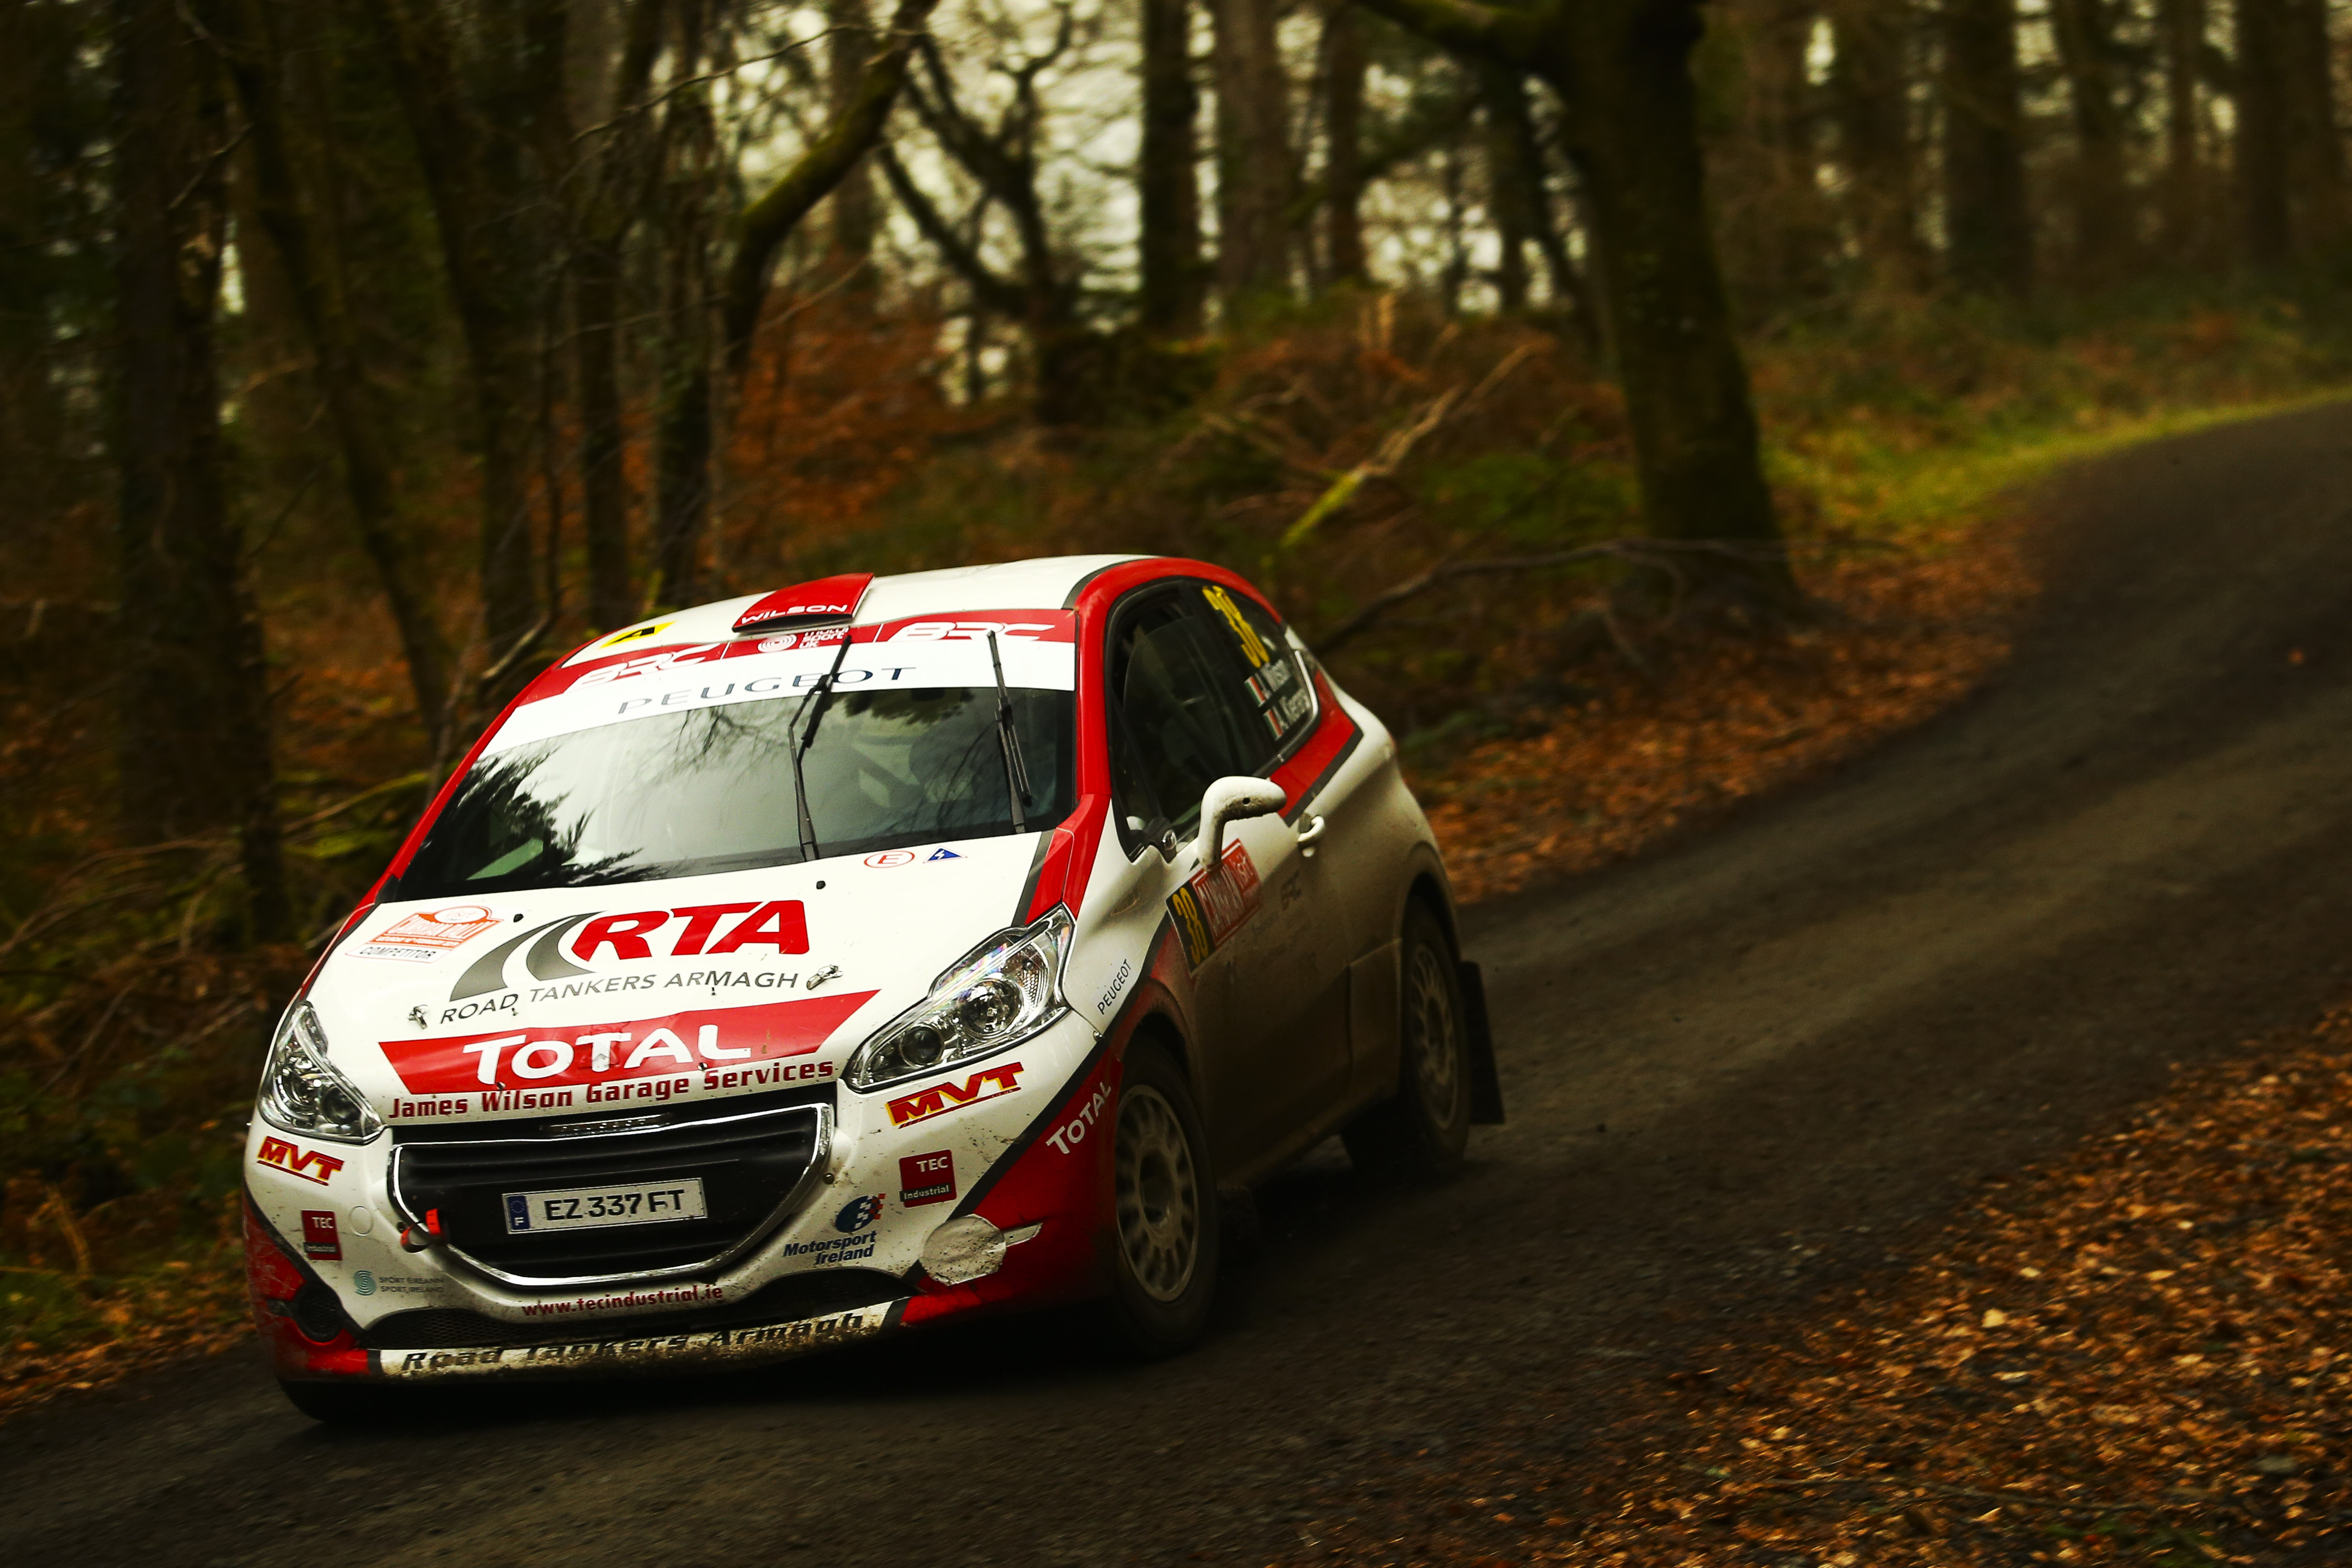 Peugeot scoop Junior British Rally Championship 1-2-3-4 at season opener